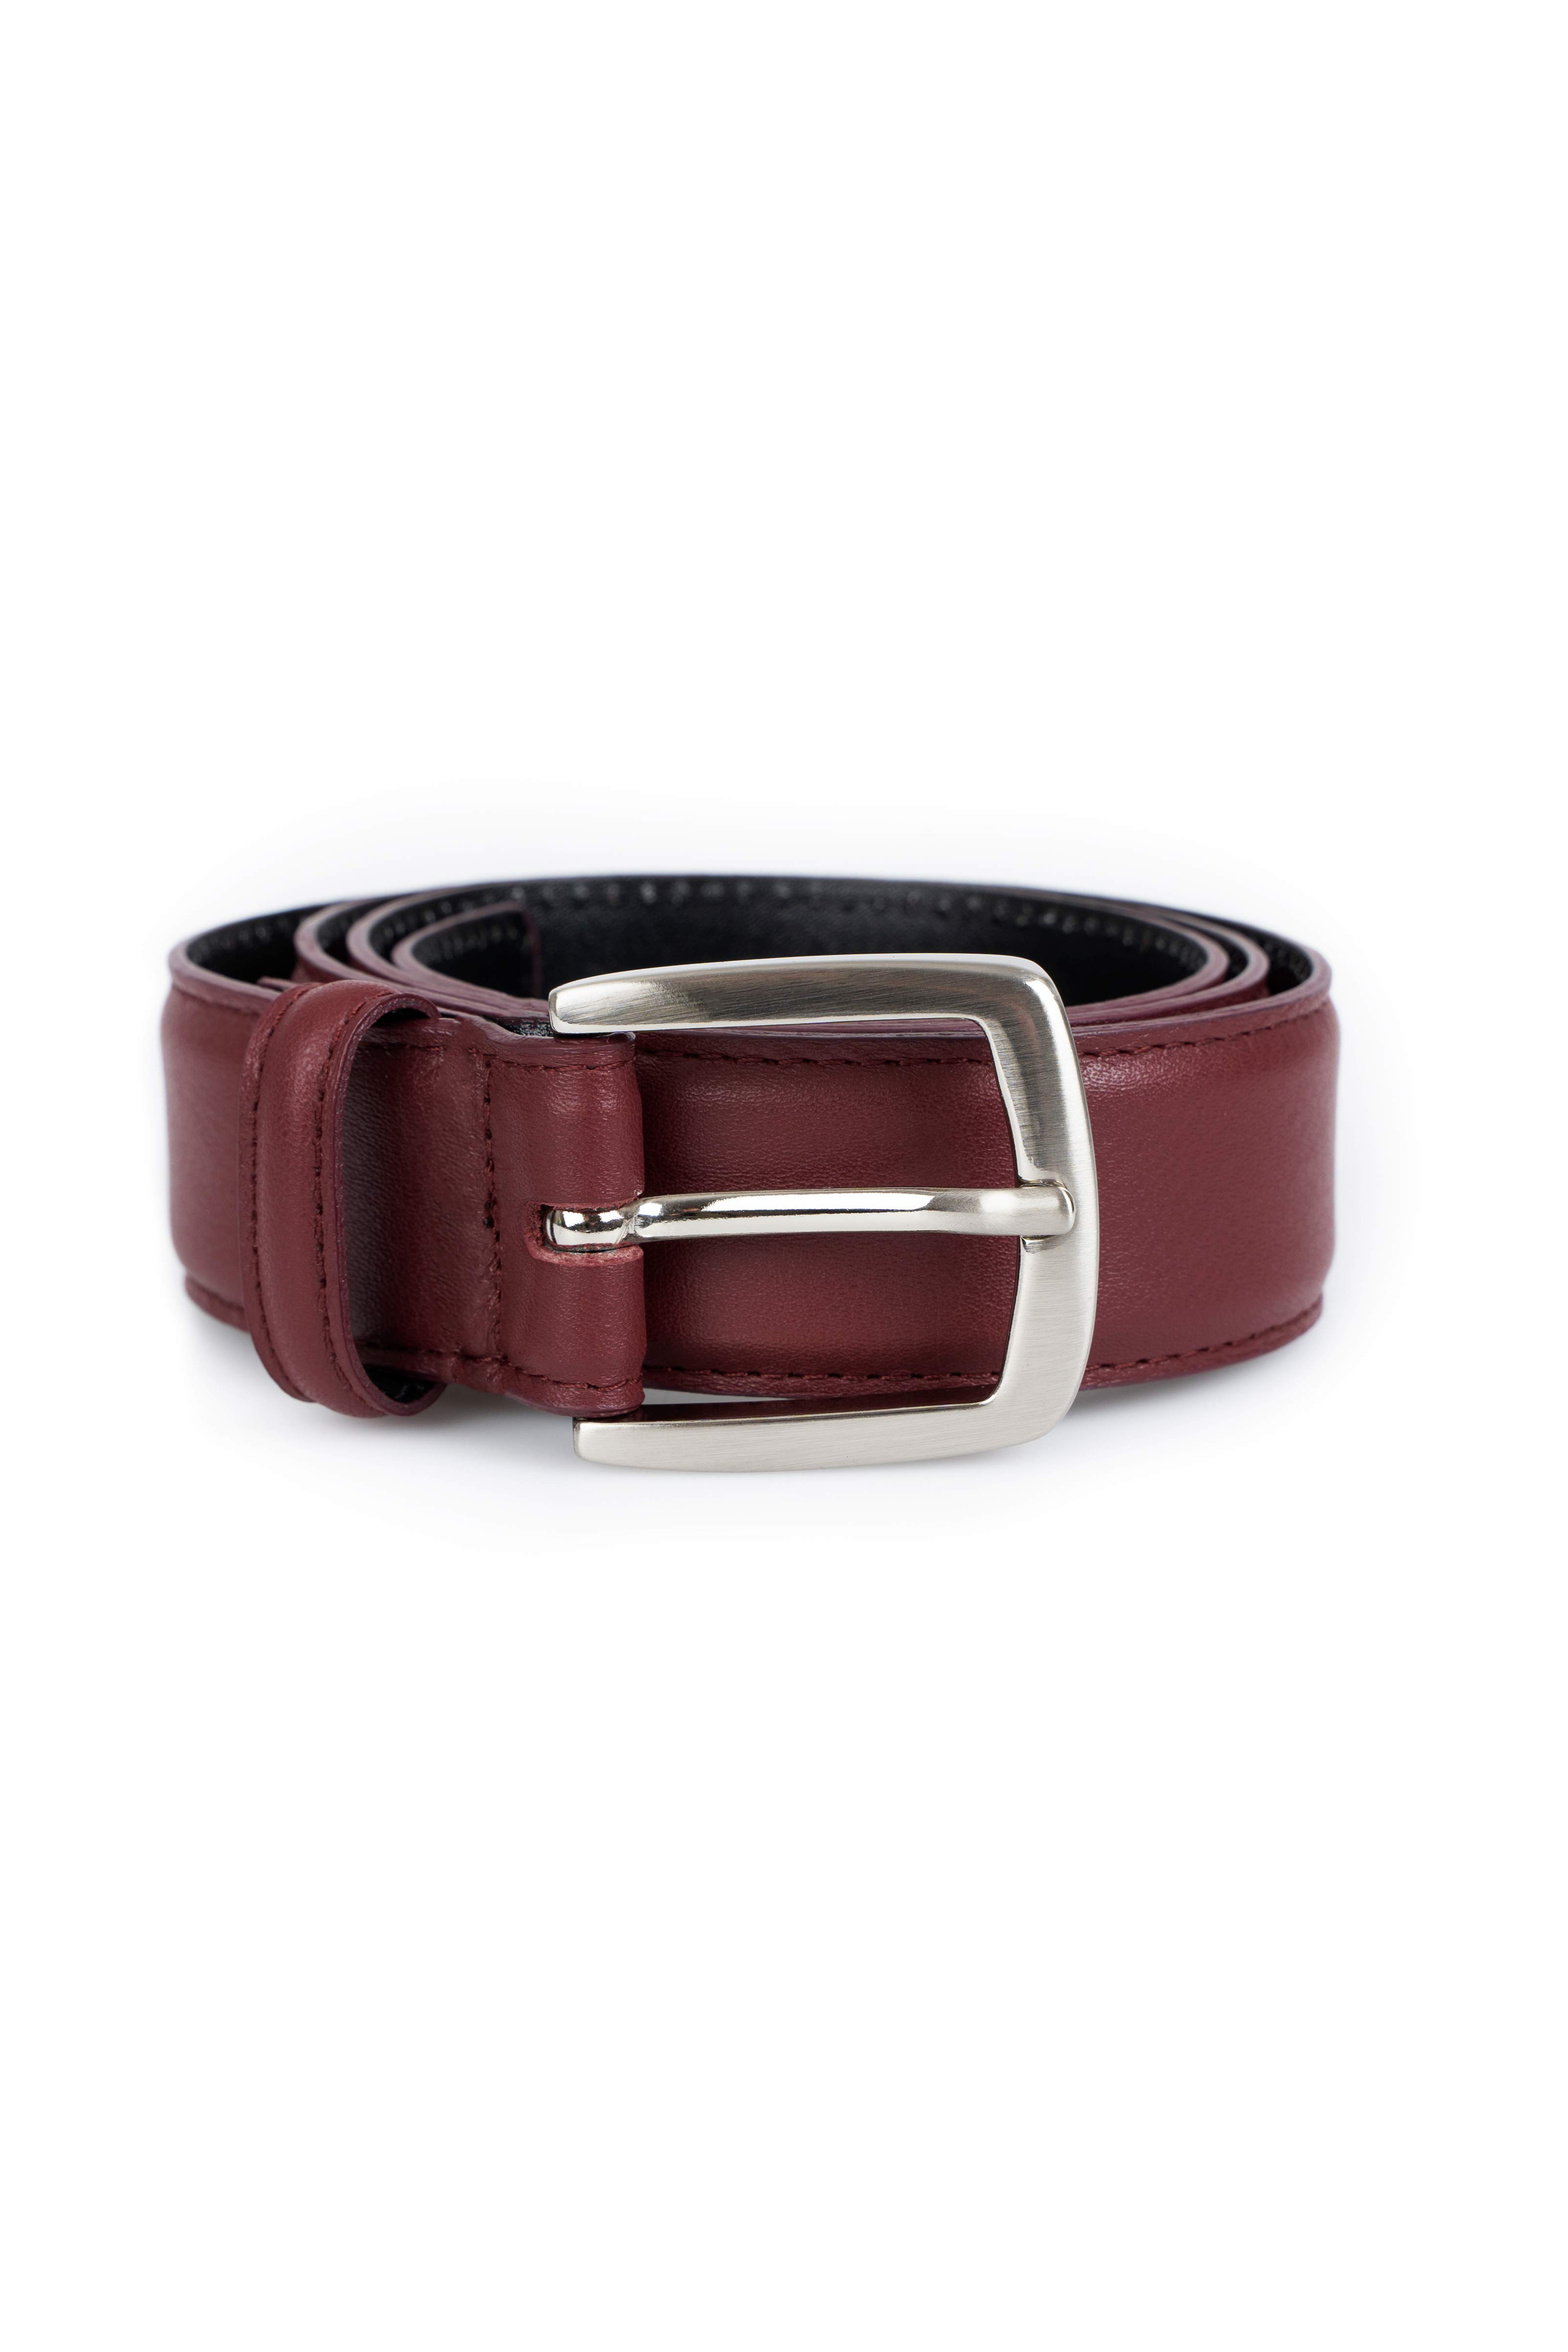 be150_classic-leather-belt_burgandy.jpg